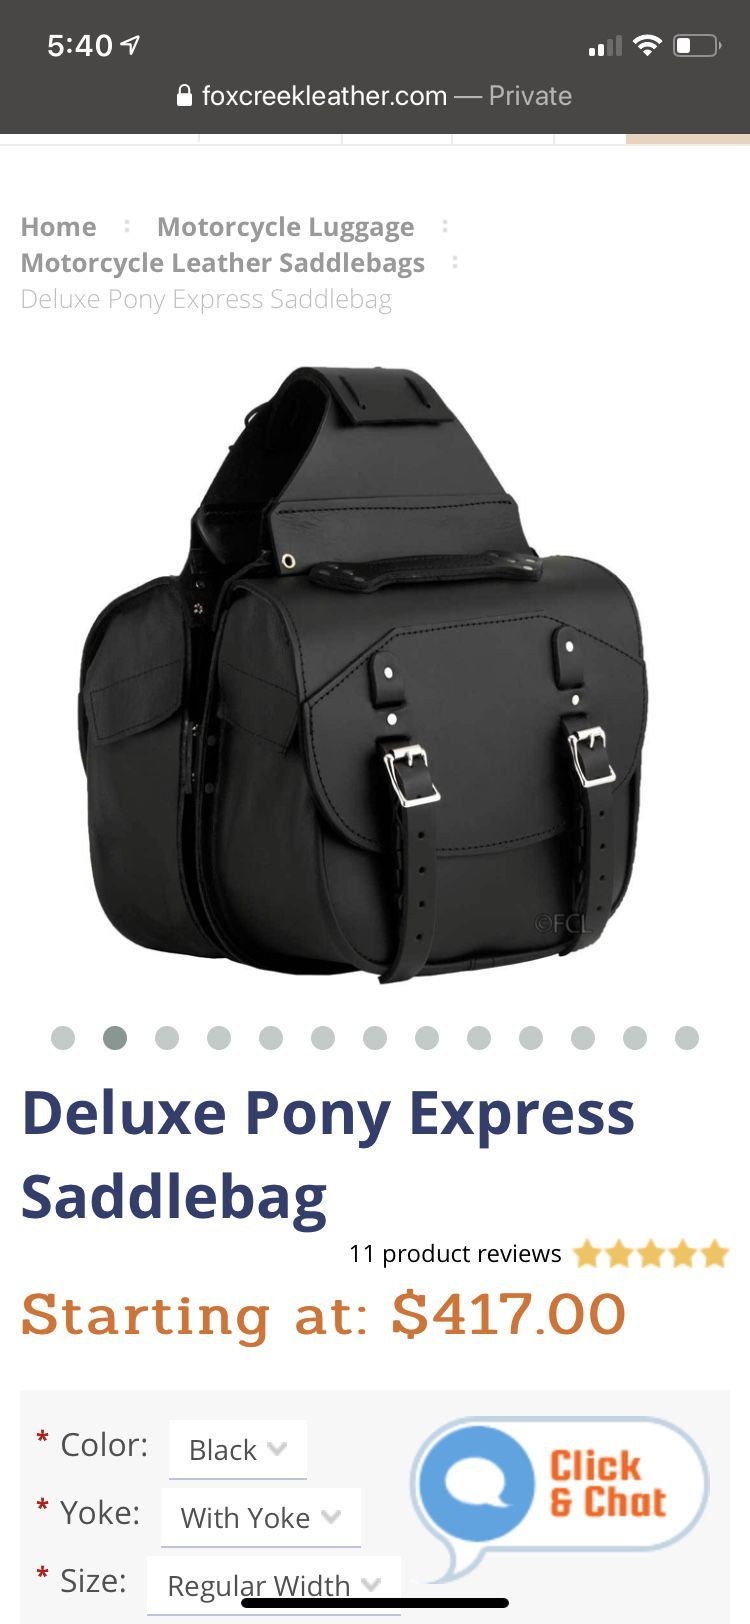 Deluxe Pony Express Saddlebag - Make an offer!